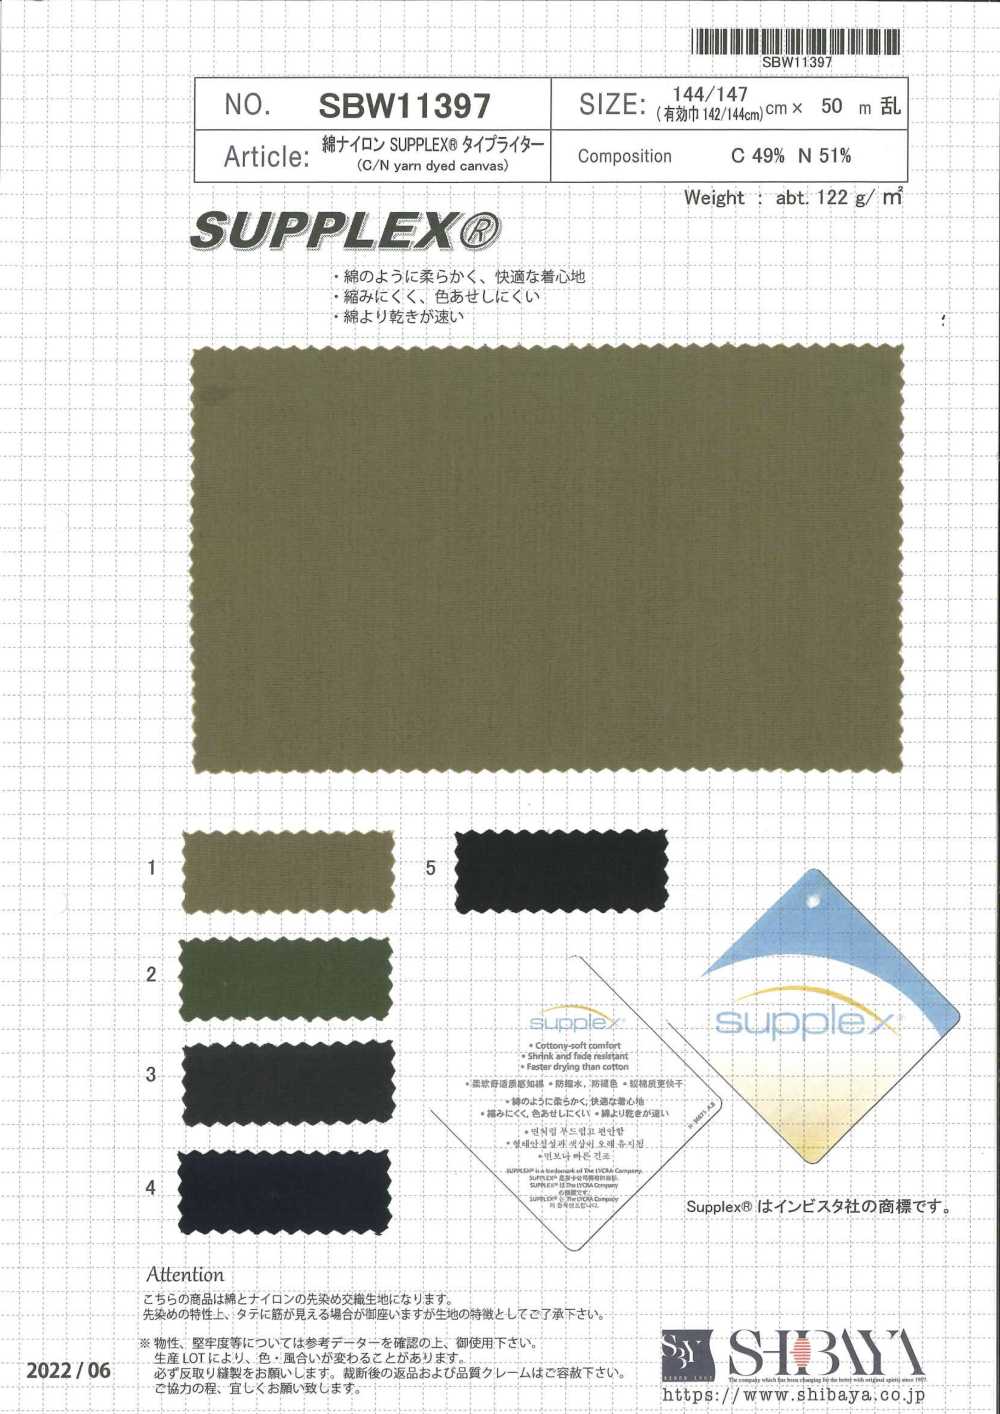 SBW11397 Cotton Nylon Vải Cotton Typewritter SUPLLEX® SHIBAYA